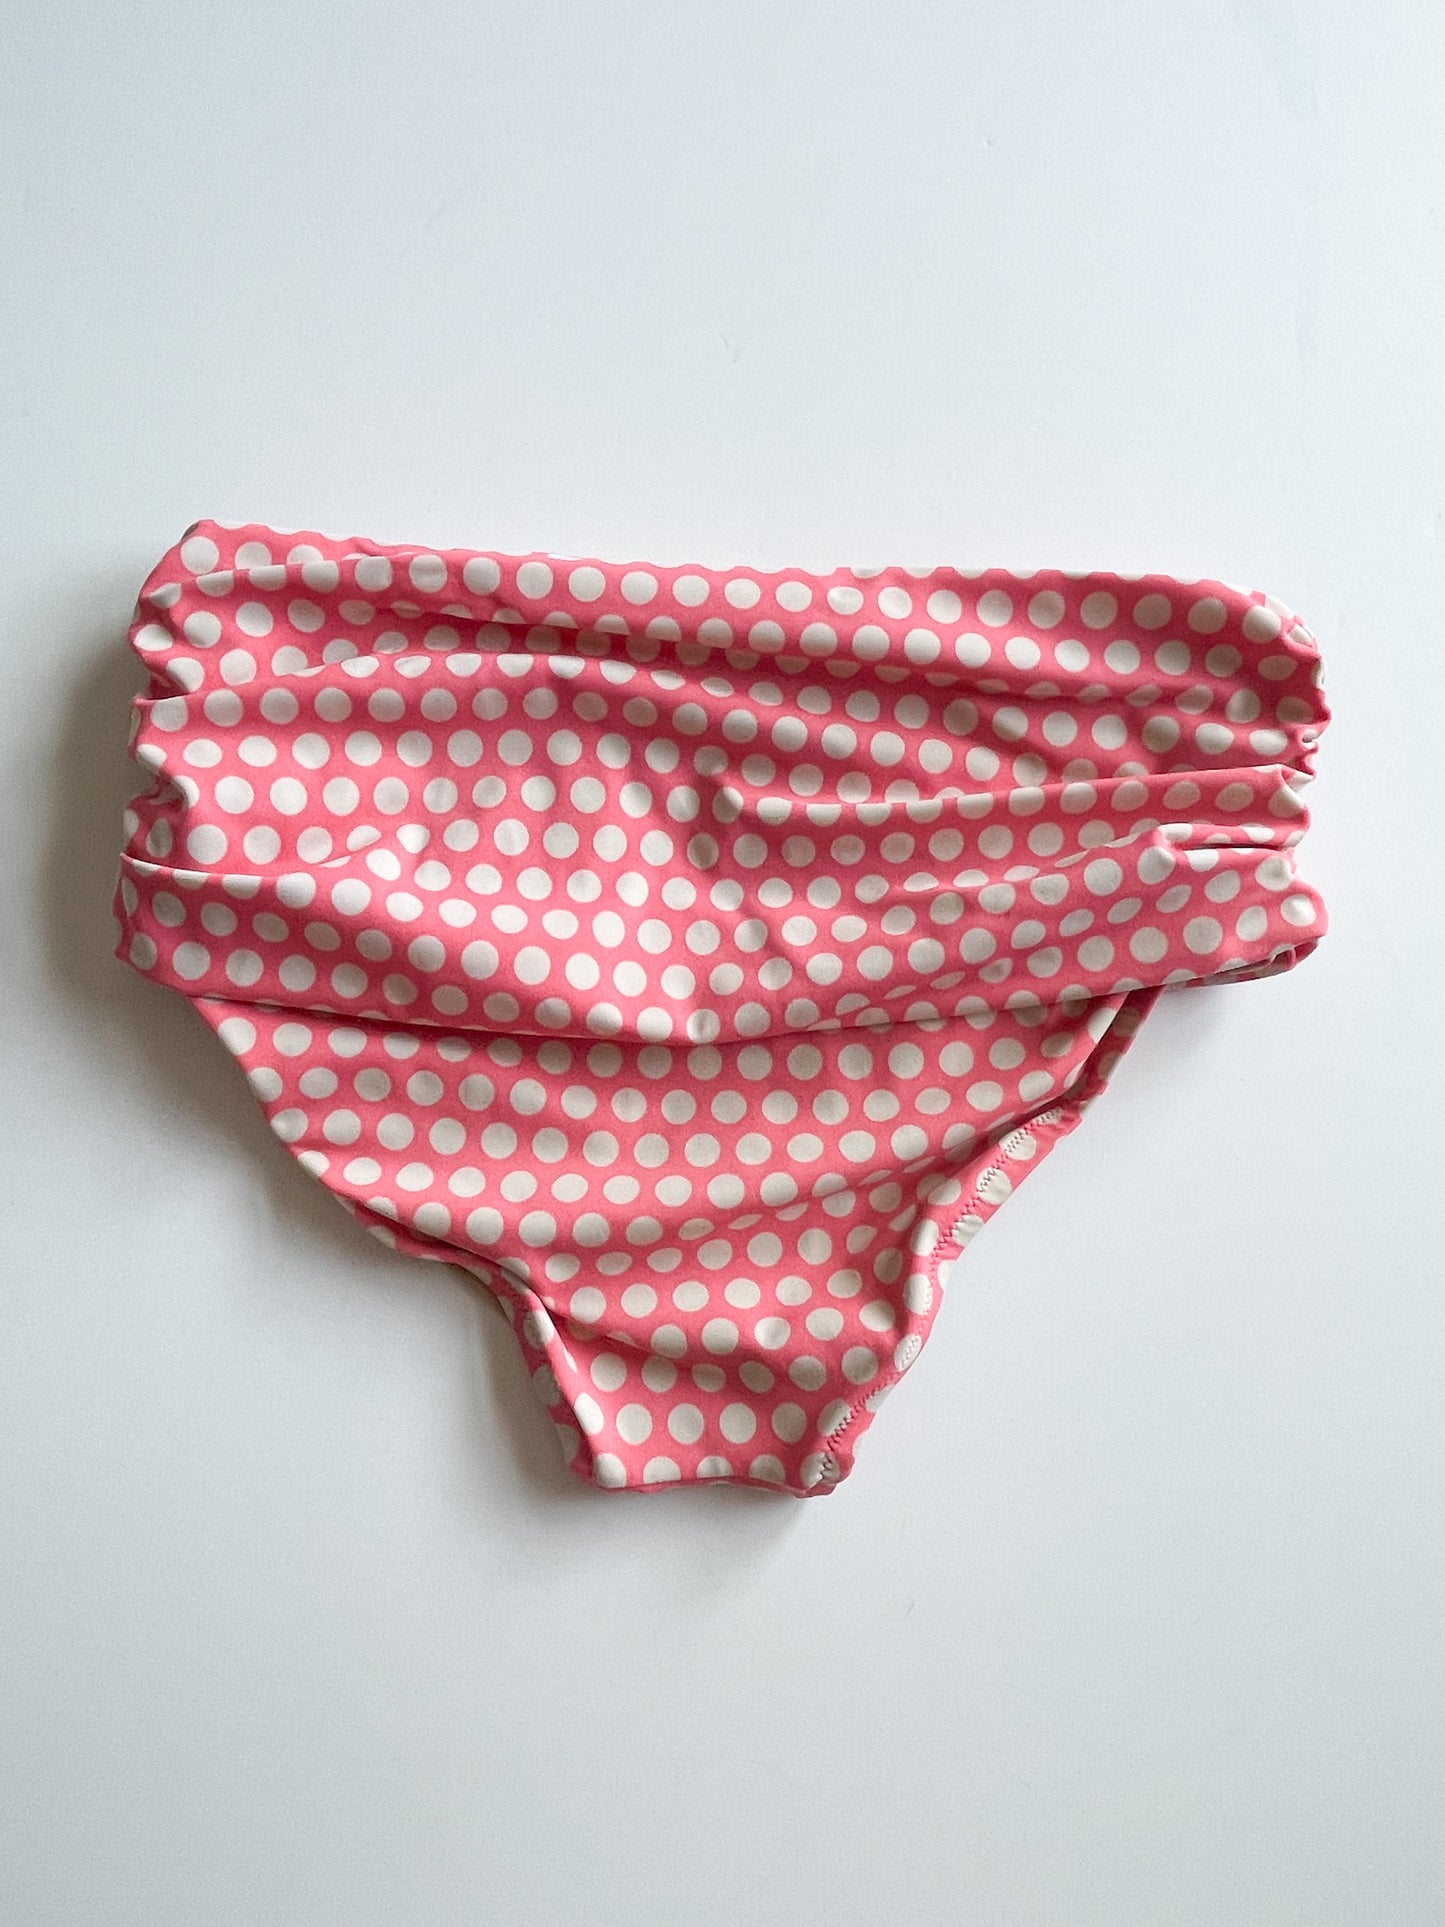 J. Crew Ruched High-Rise Bikini Bottom in Pink Polkadot Print - Small